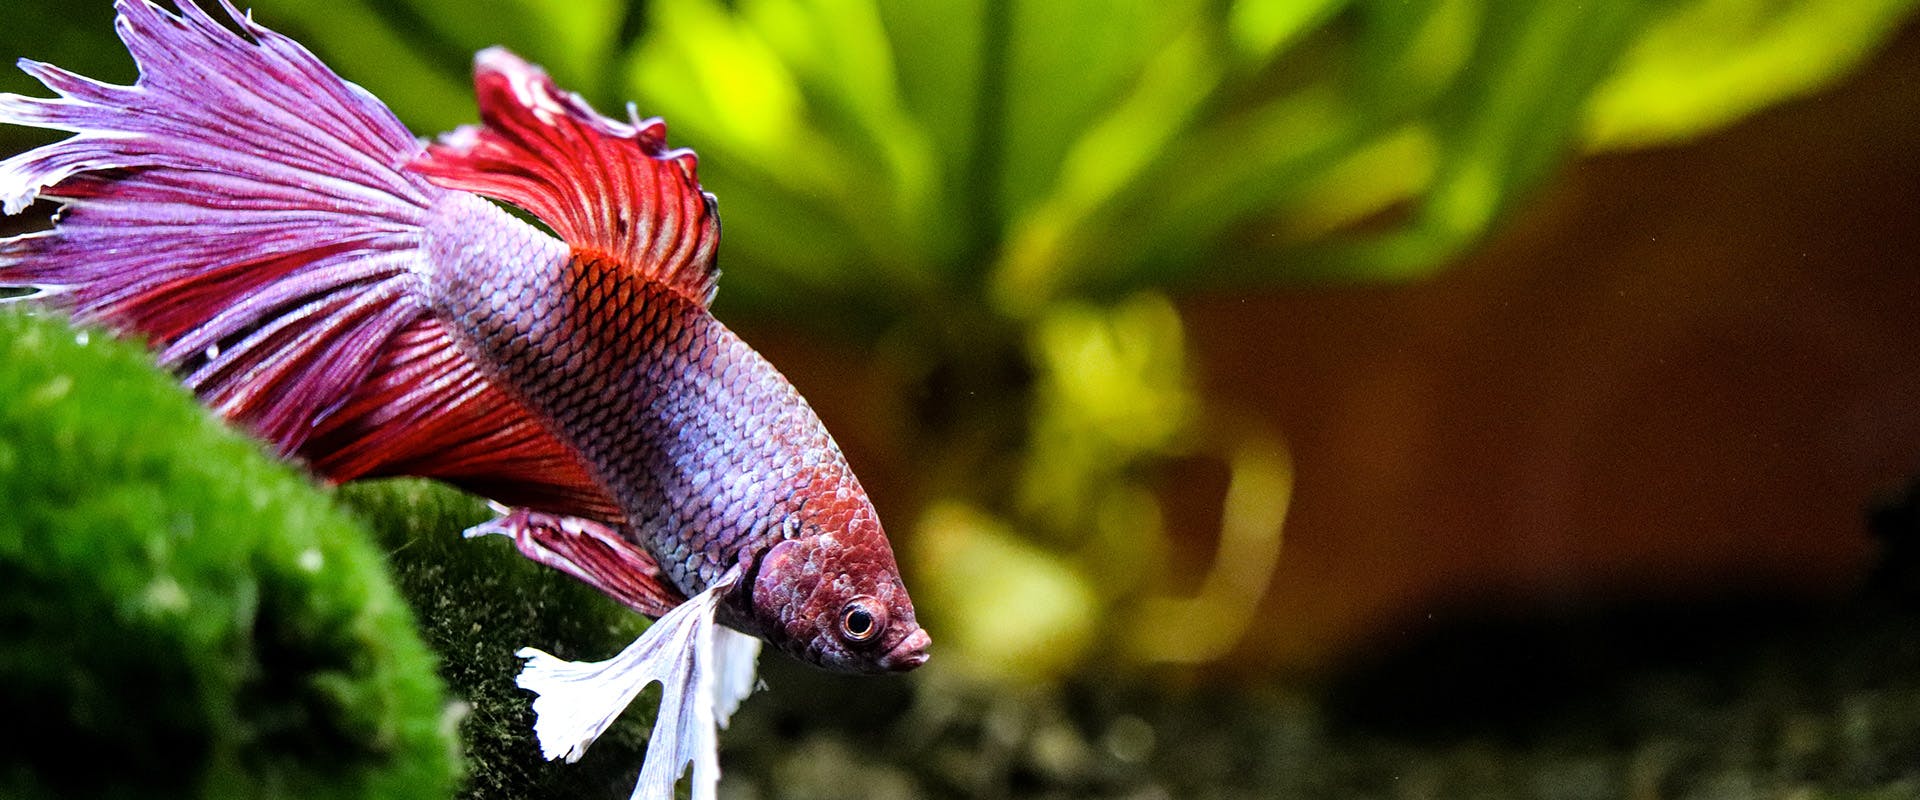 A bright red betta fish